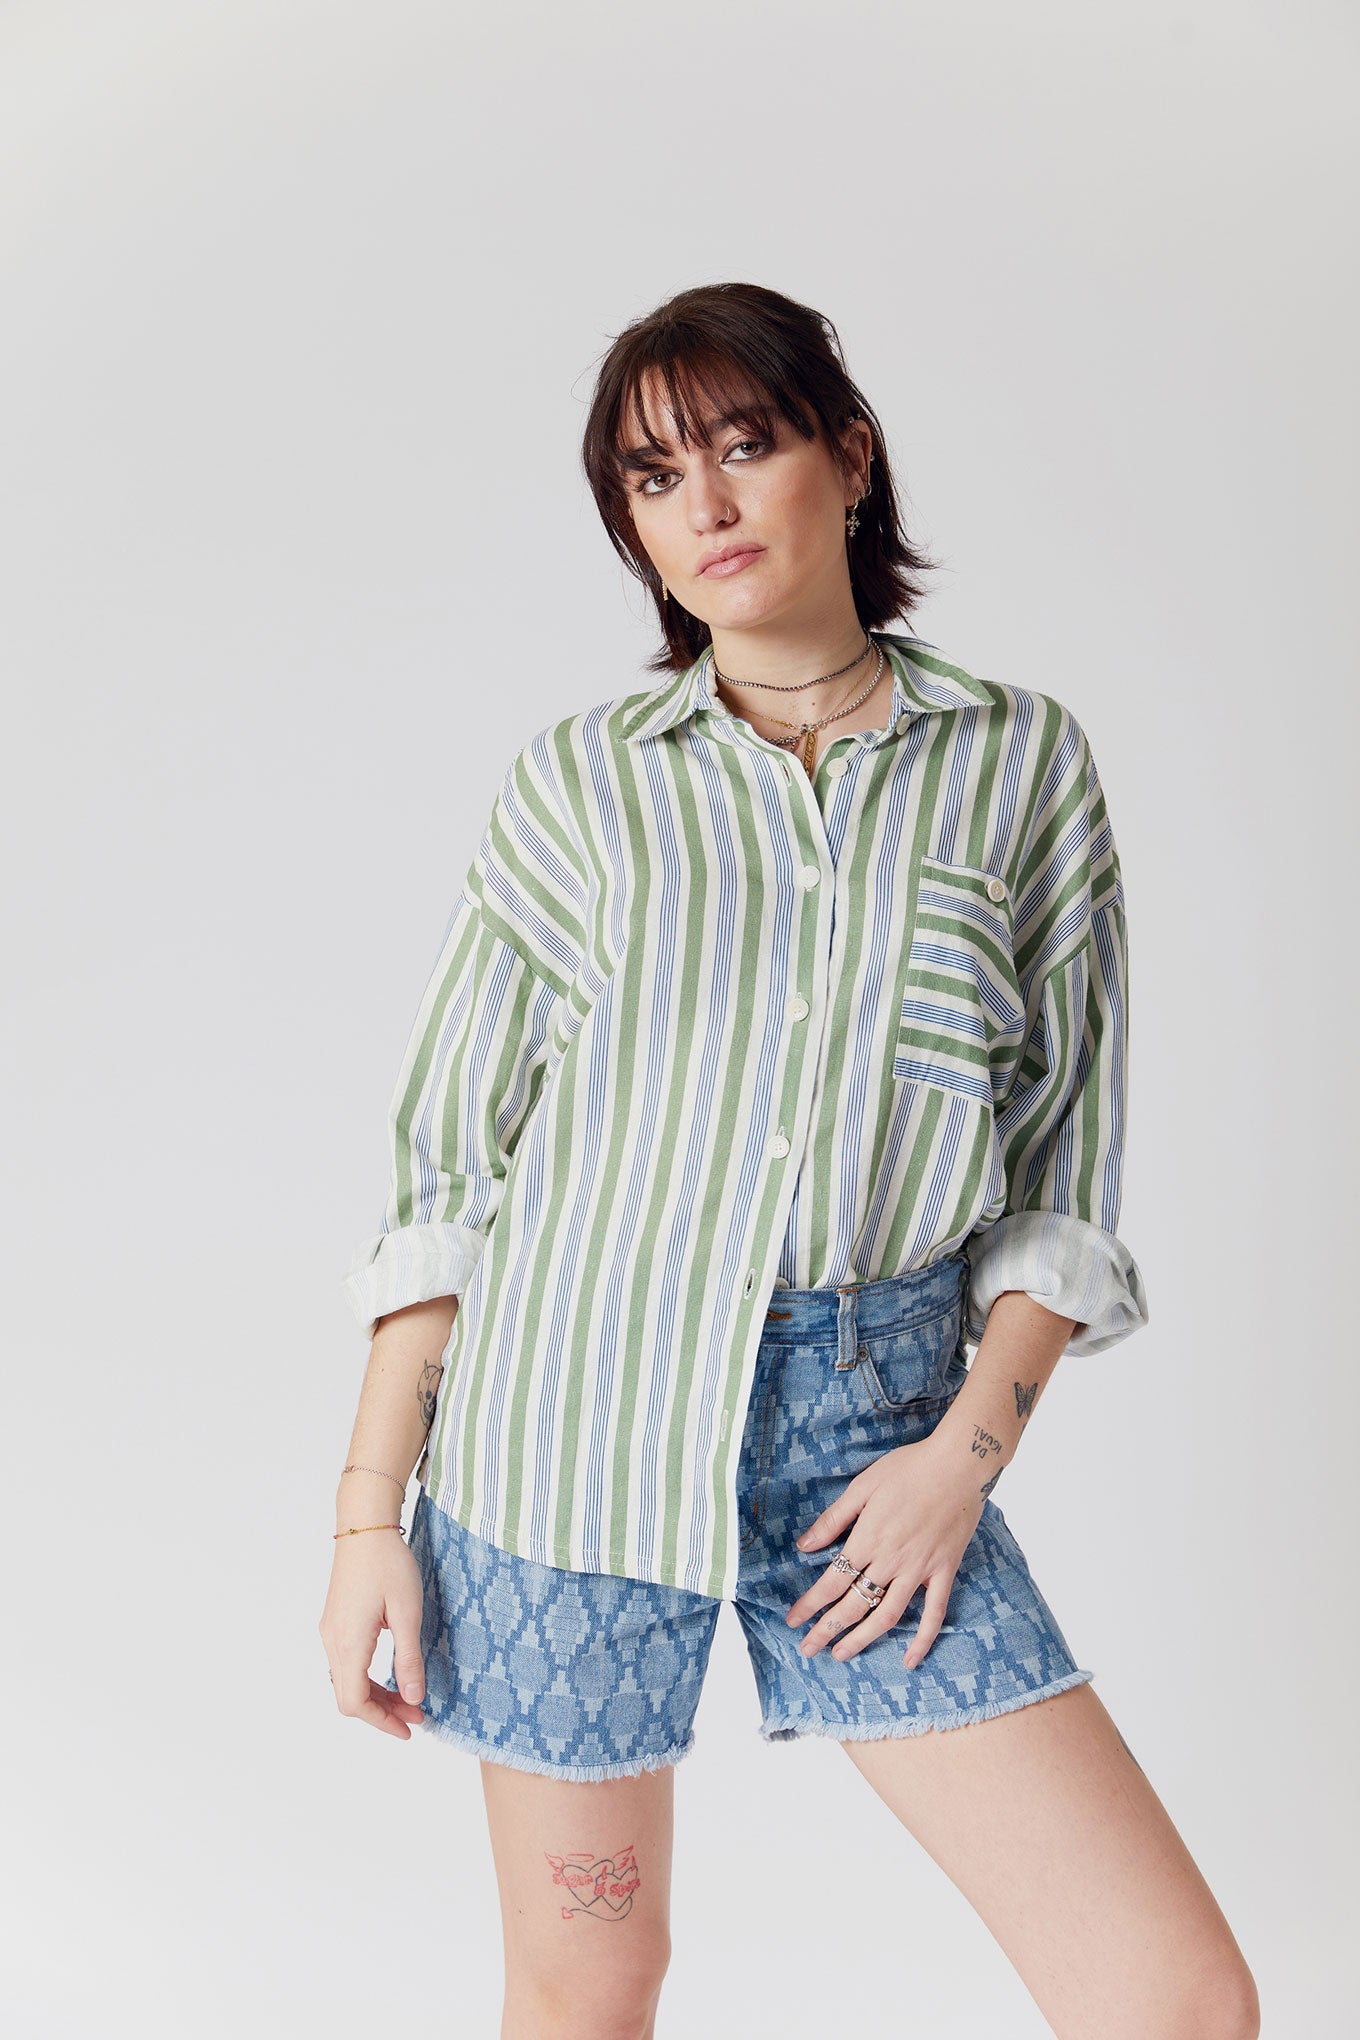 HANAKO Organic Linen Shirt Sage Green Stripe, SIZE 4 / UK 14 / EUR 42